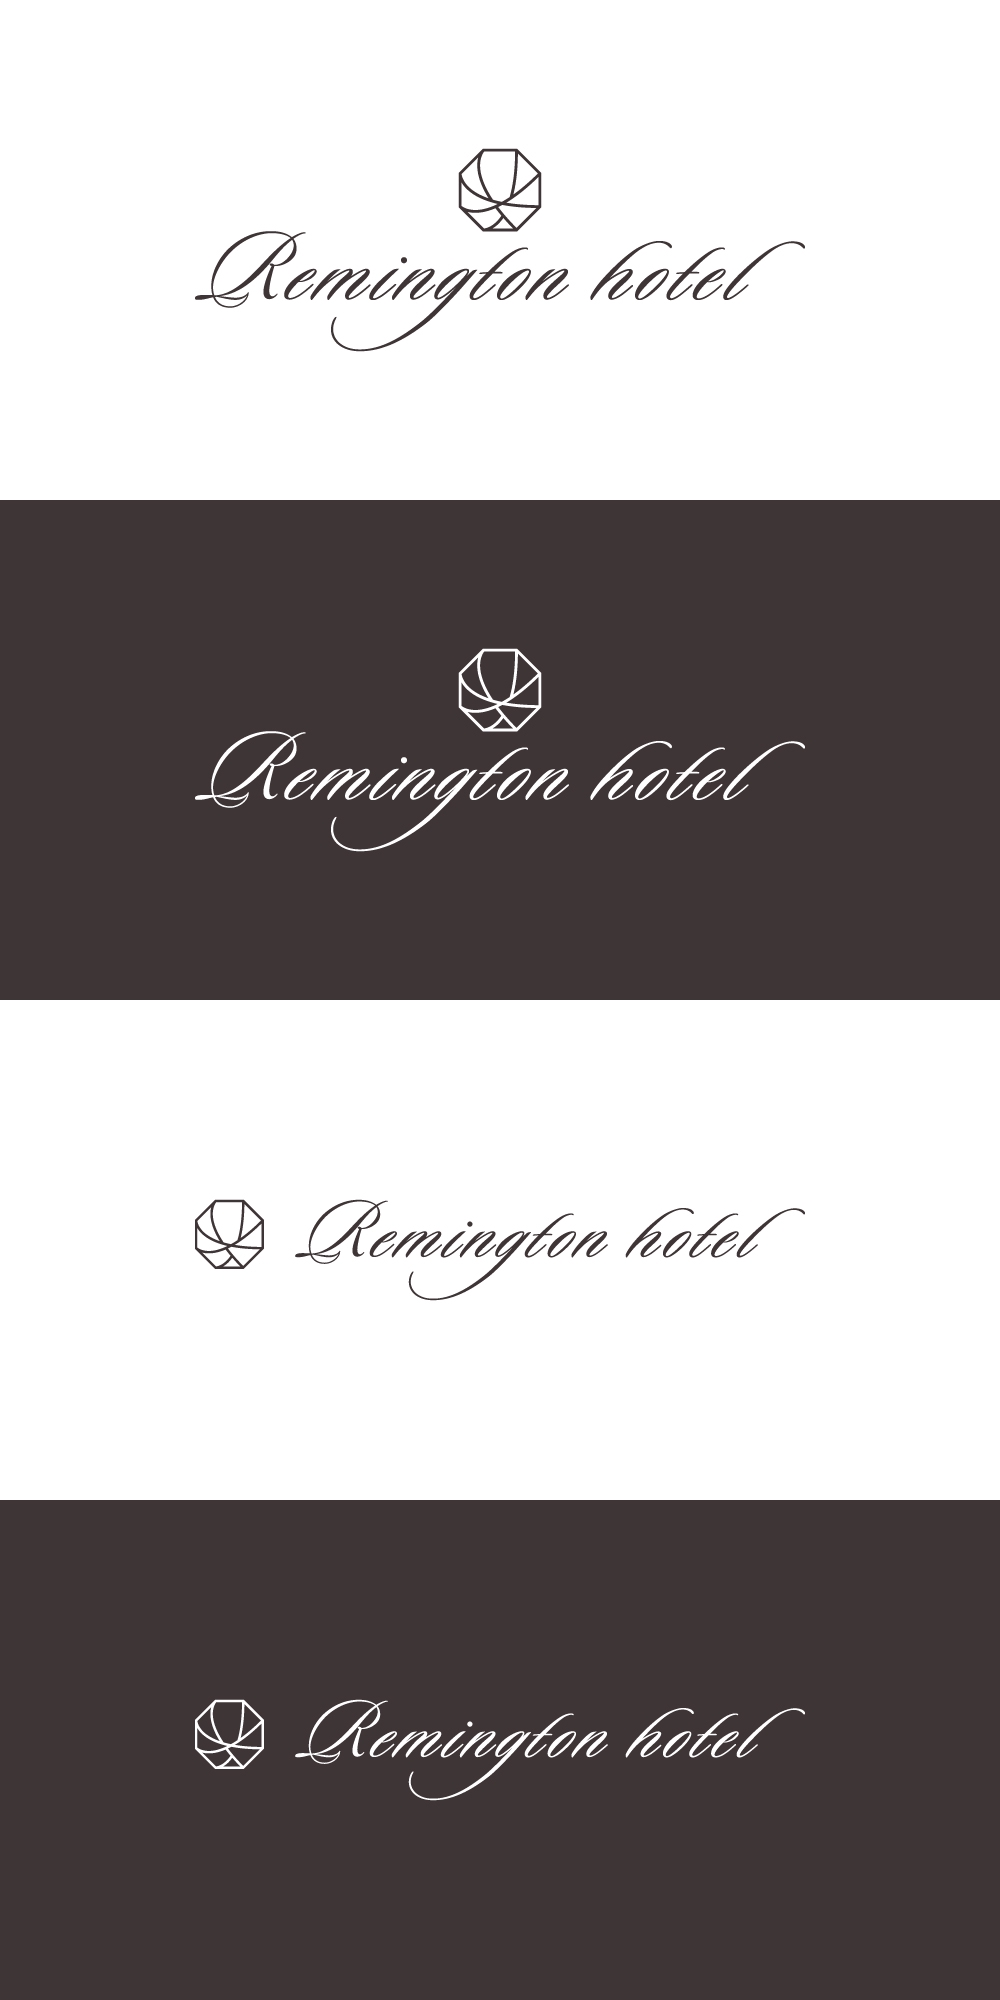 remington-hotel.jpg